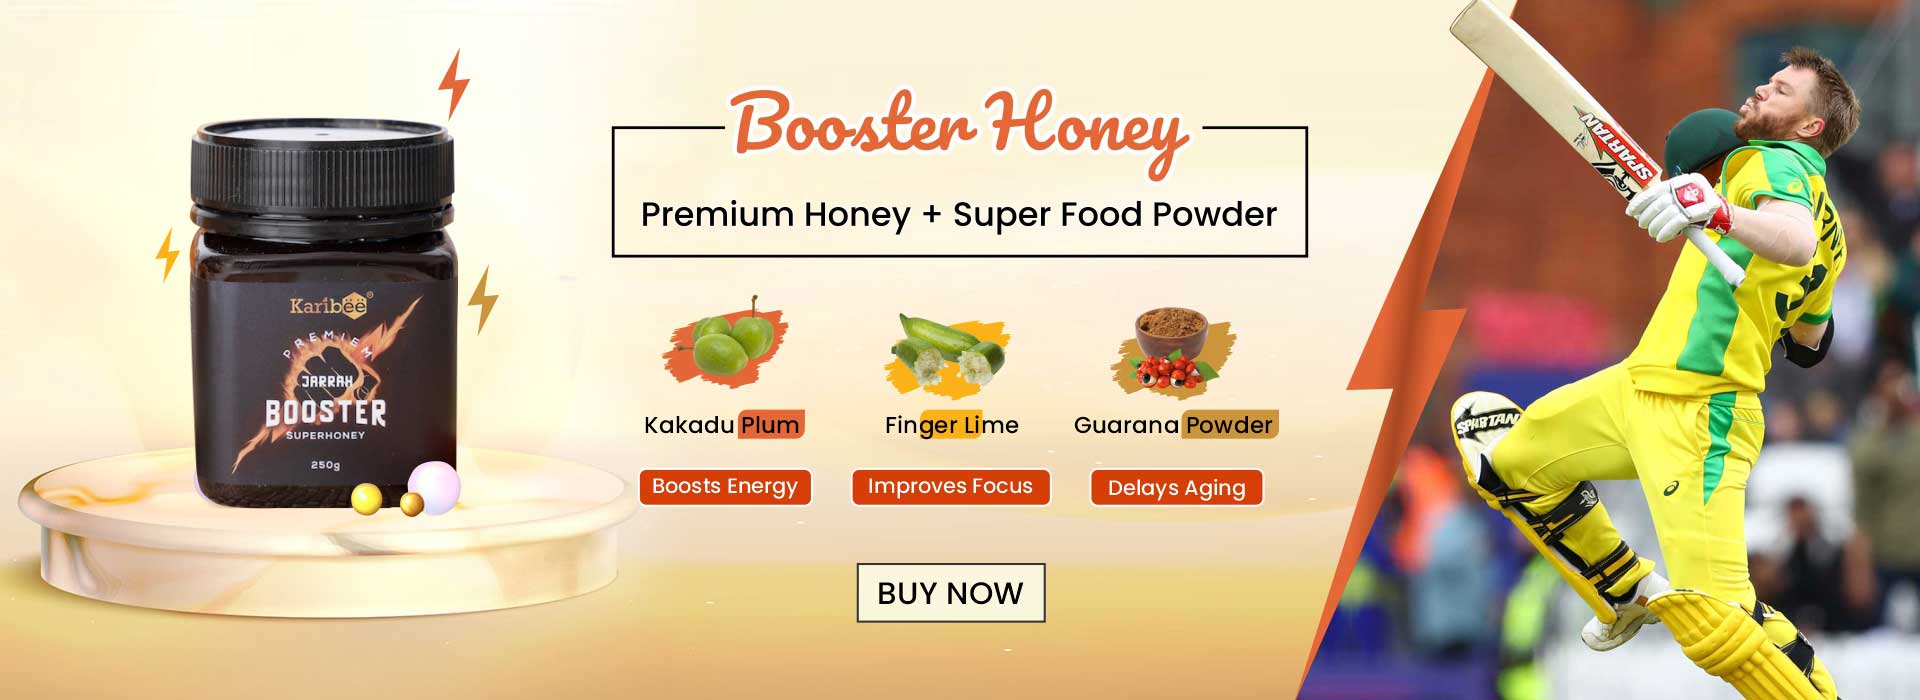 karibee-booster-honey